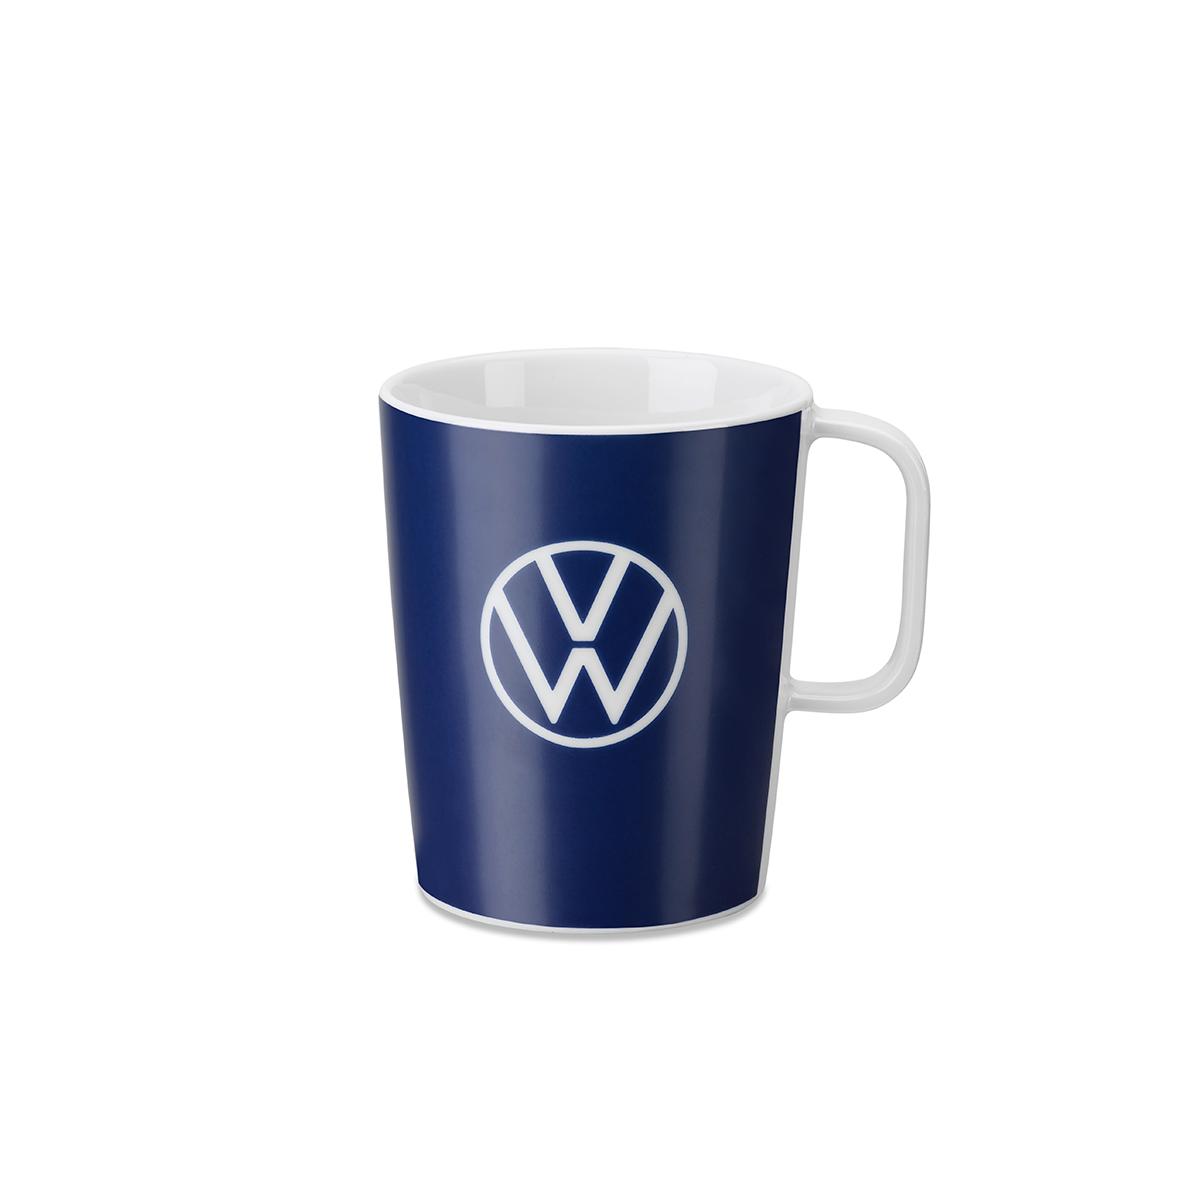 Kubek - nowe logo VW, granatowy